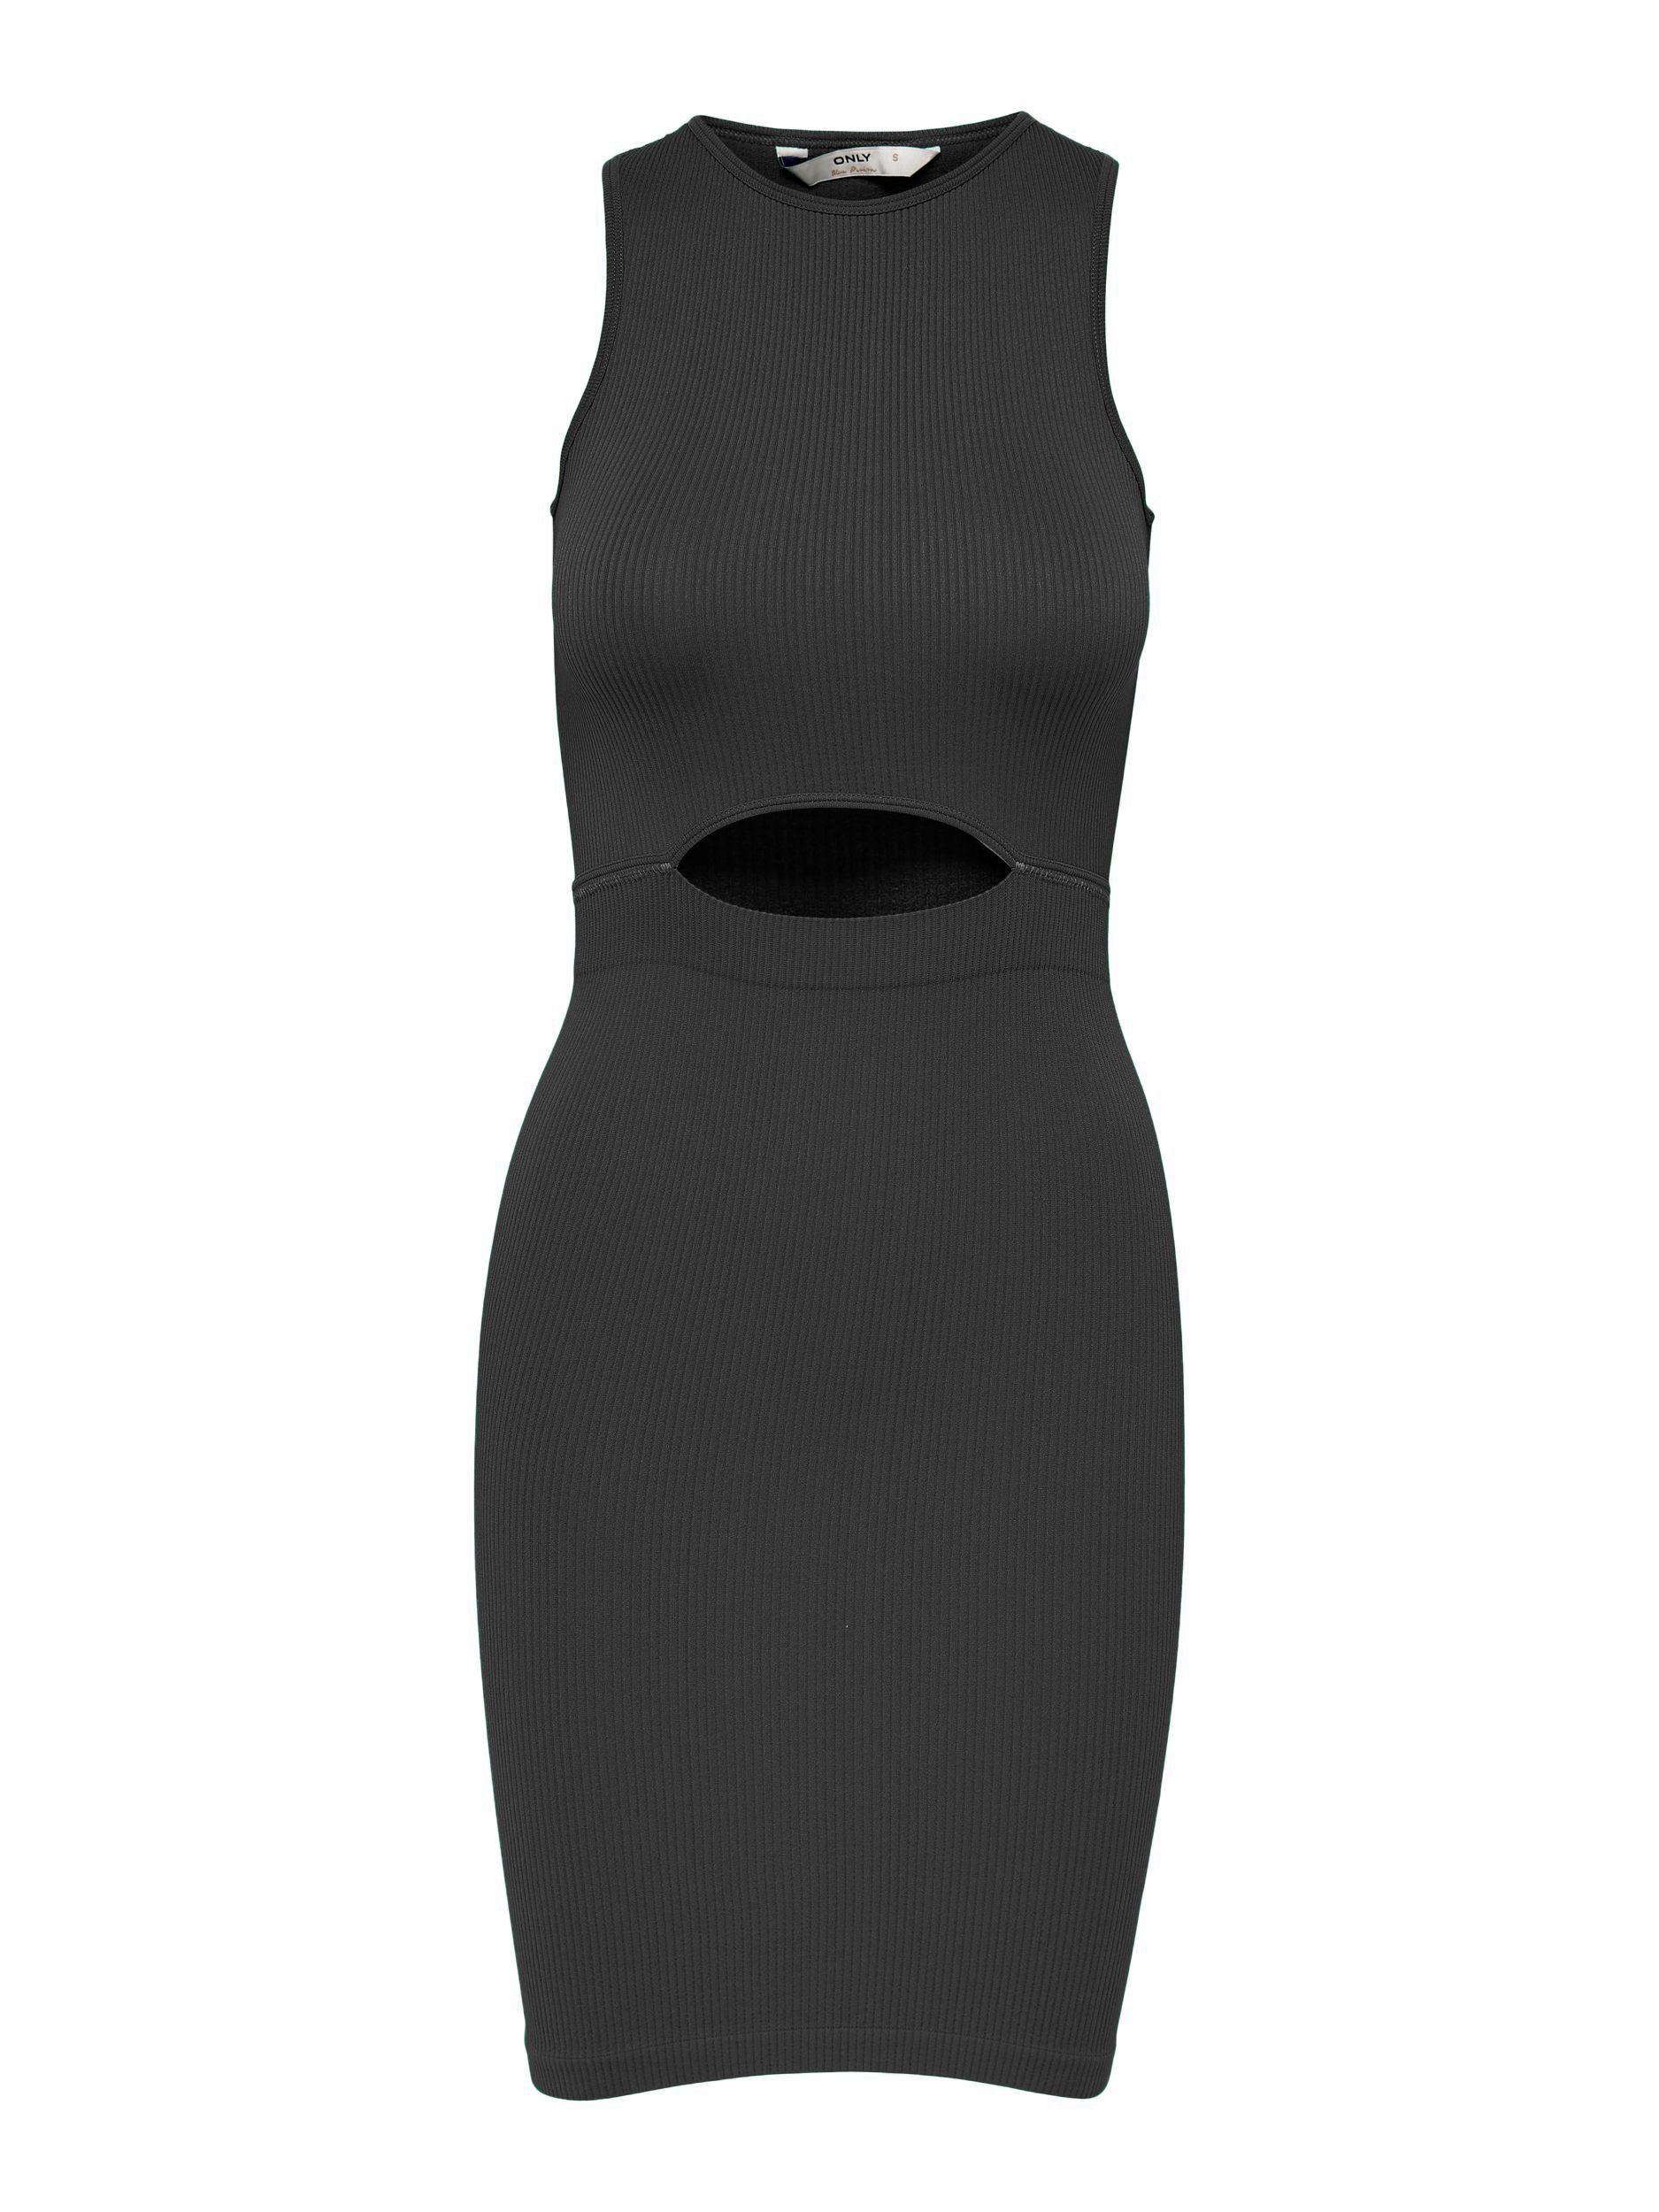 Gwen cutout rib mini dress, BLACK, large